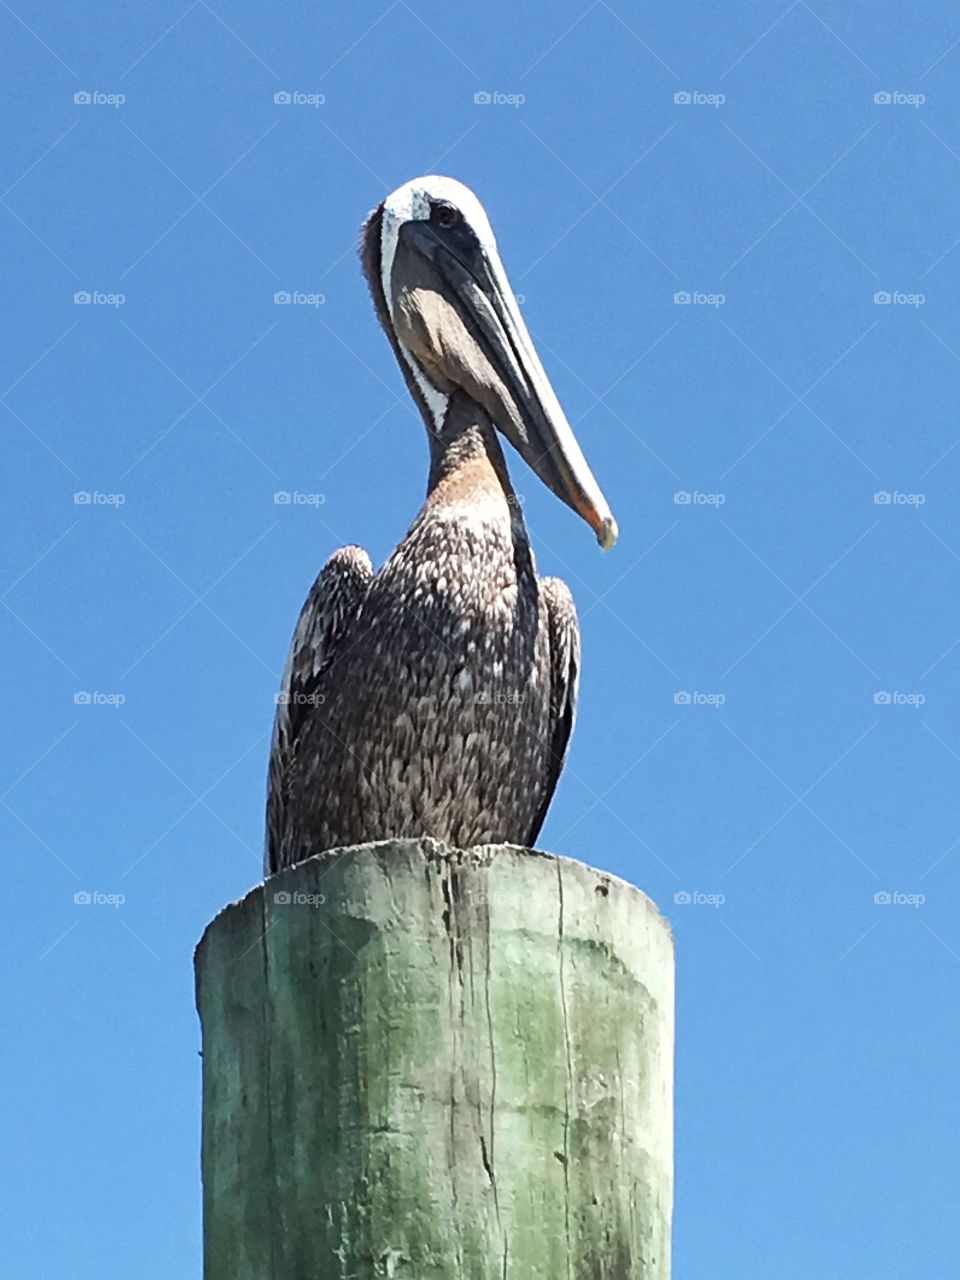 Pelican at the gulf coast. 